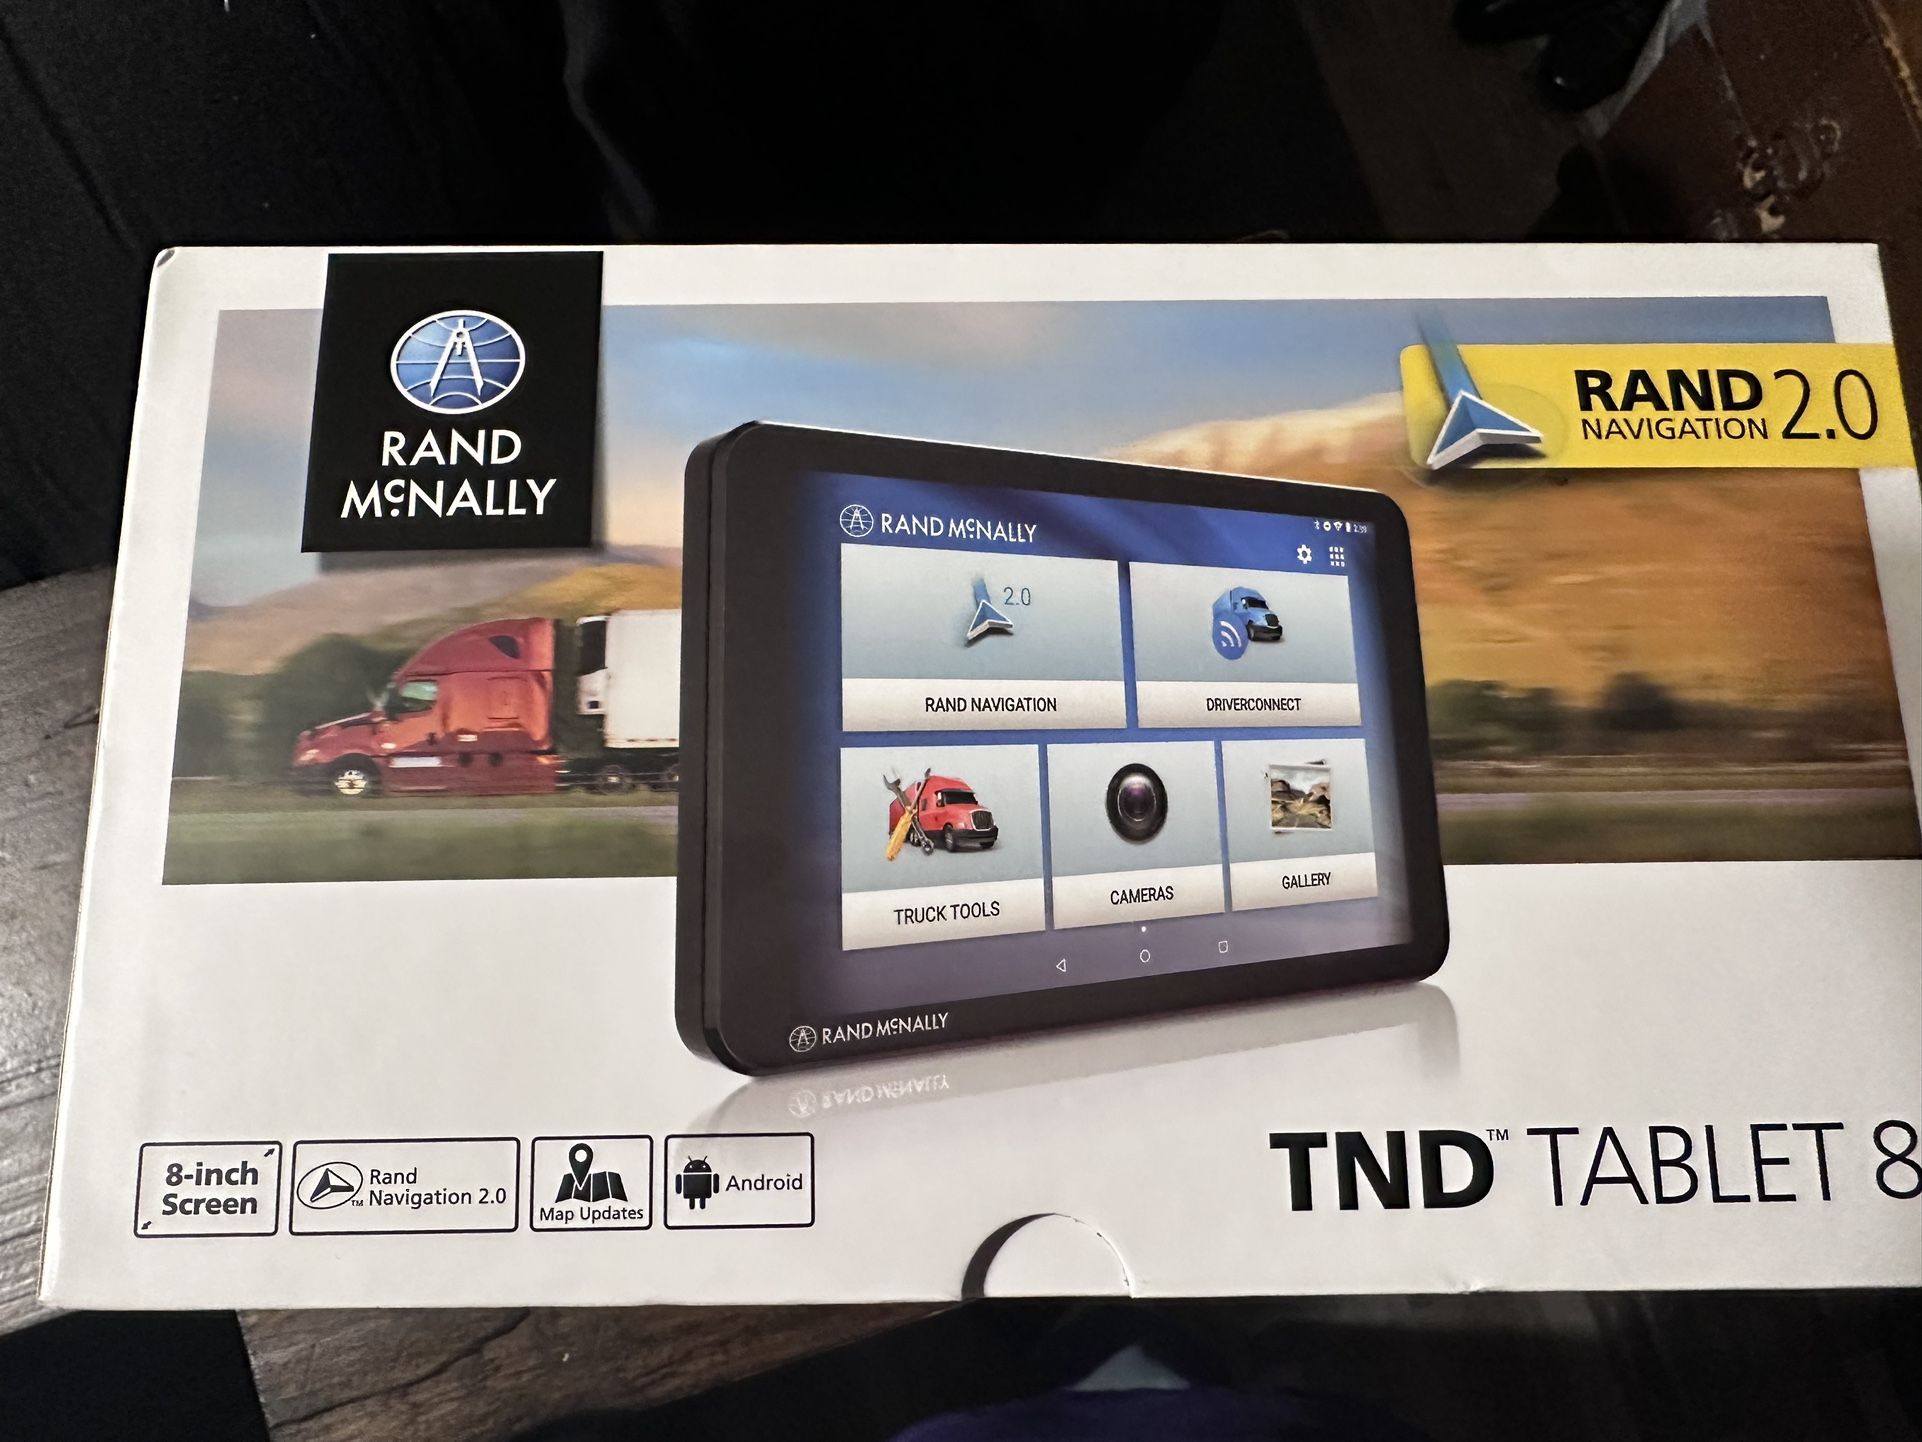 Rand McNally TND Tablet 85